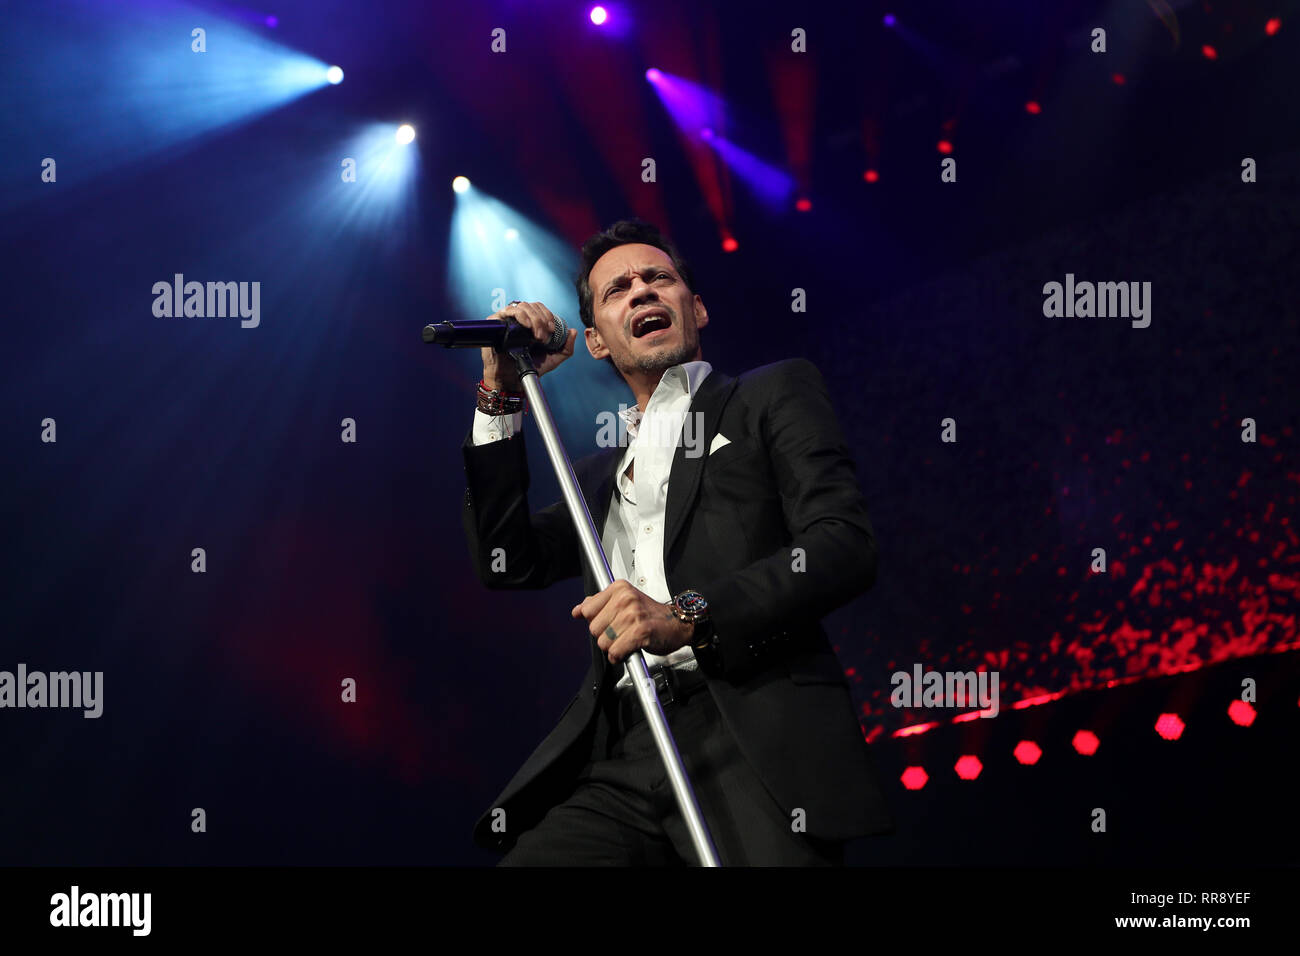 UNIONDALE, NY-FEB 23: Sänger Marc Anthony führt im Konzert an nycb Live am 23. Februar 2019 in Uniondale, New York. Stockfoto